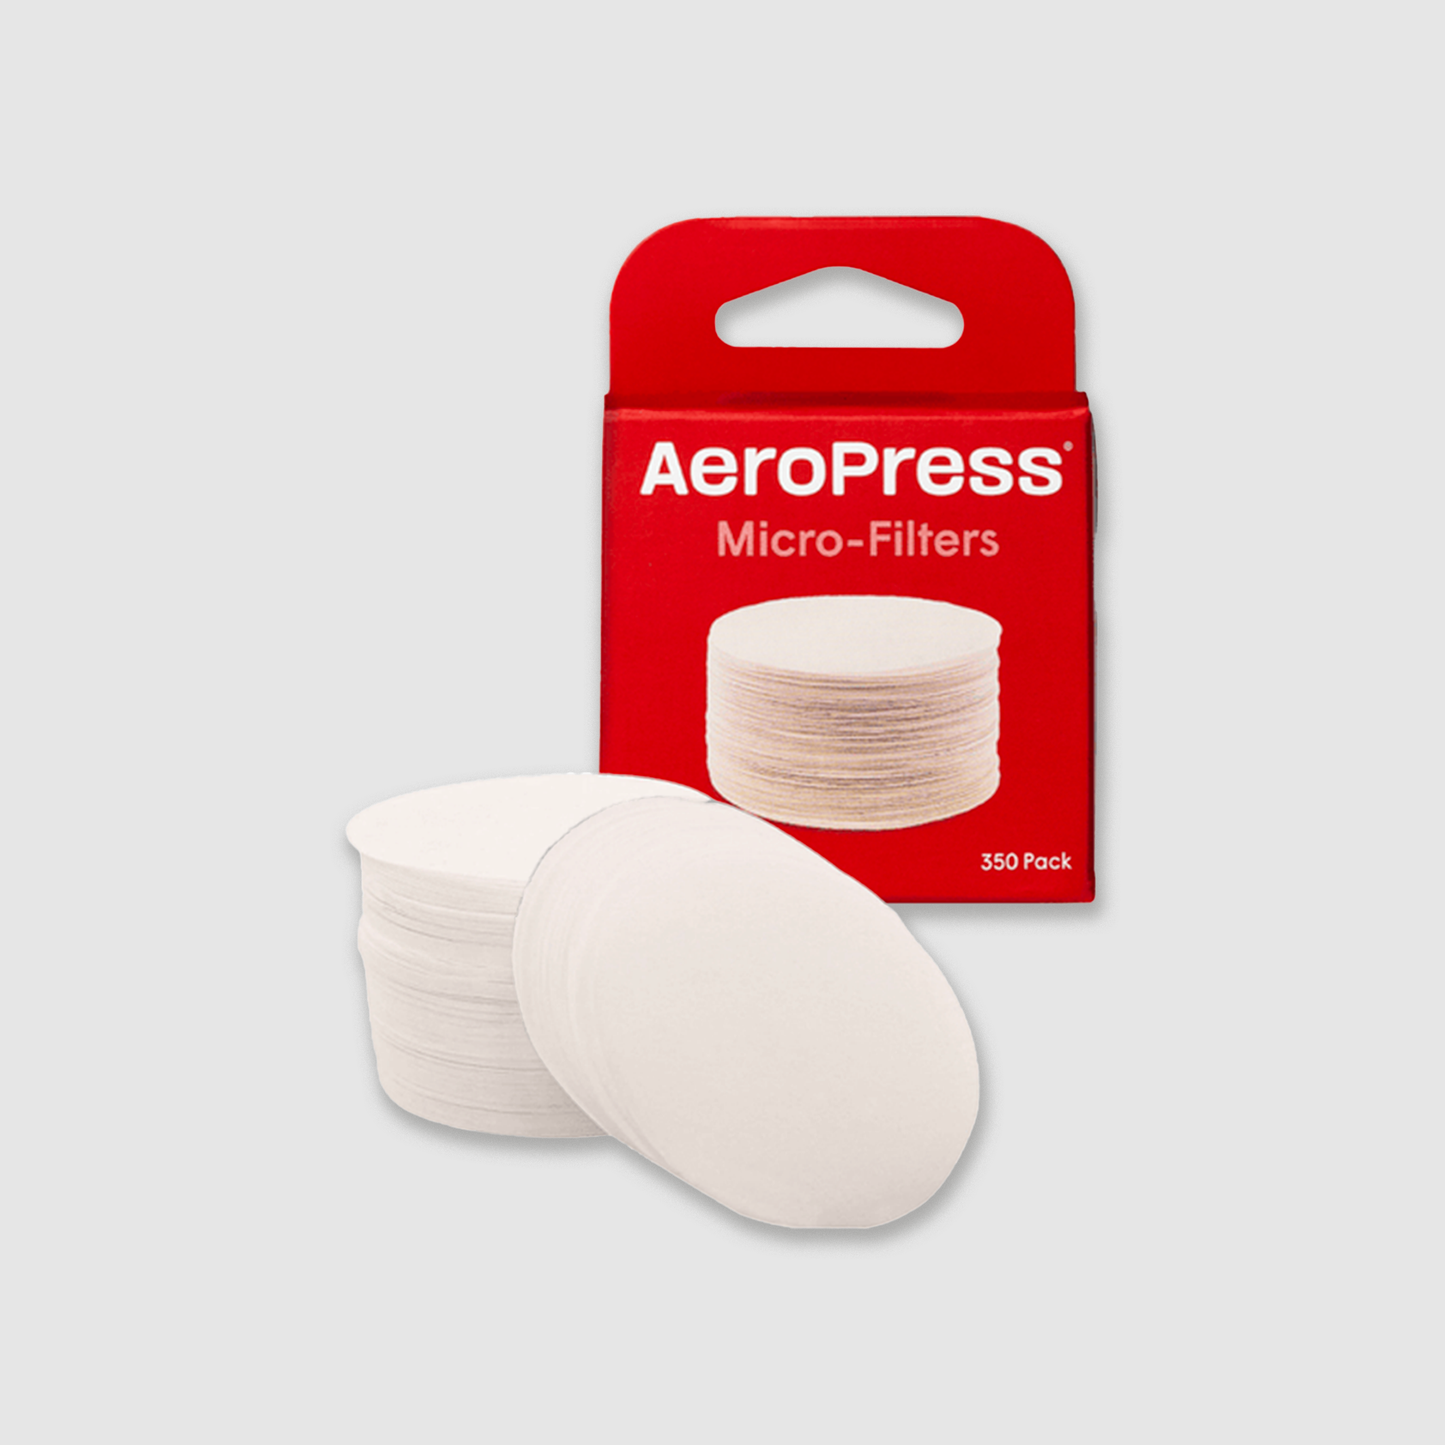 AeroPress Micro-Filters - 350pack